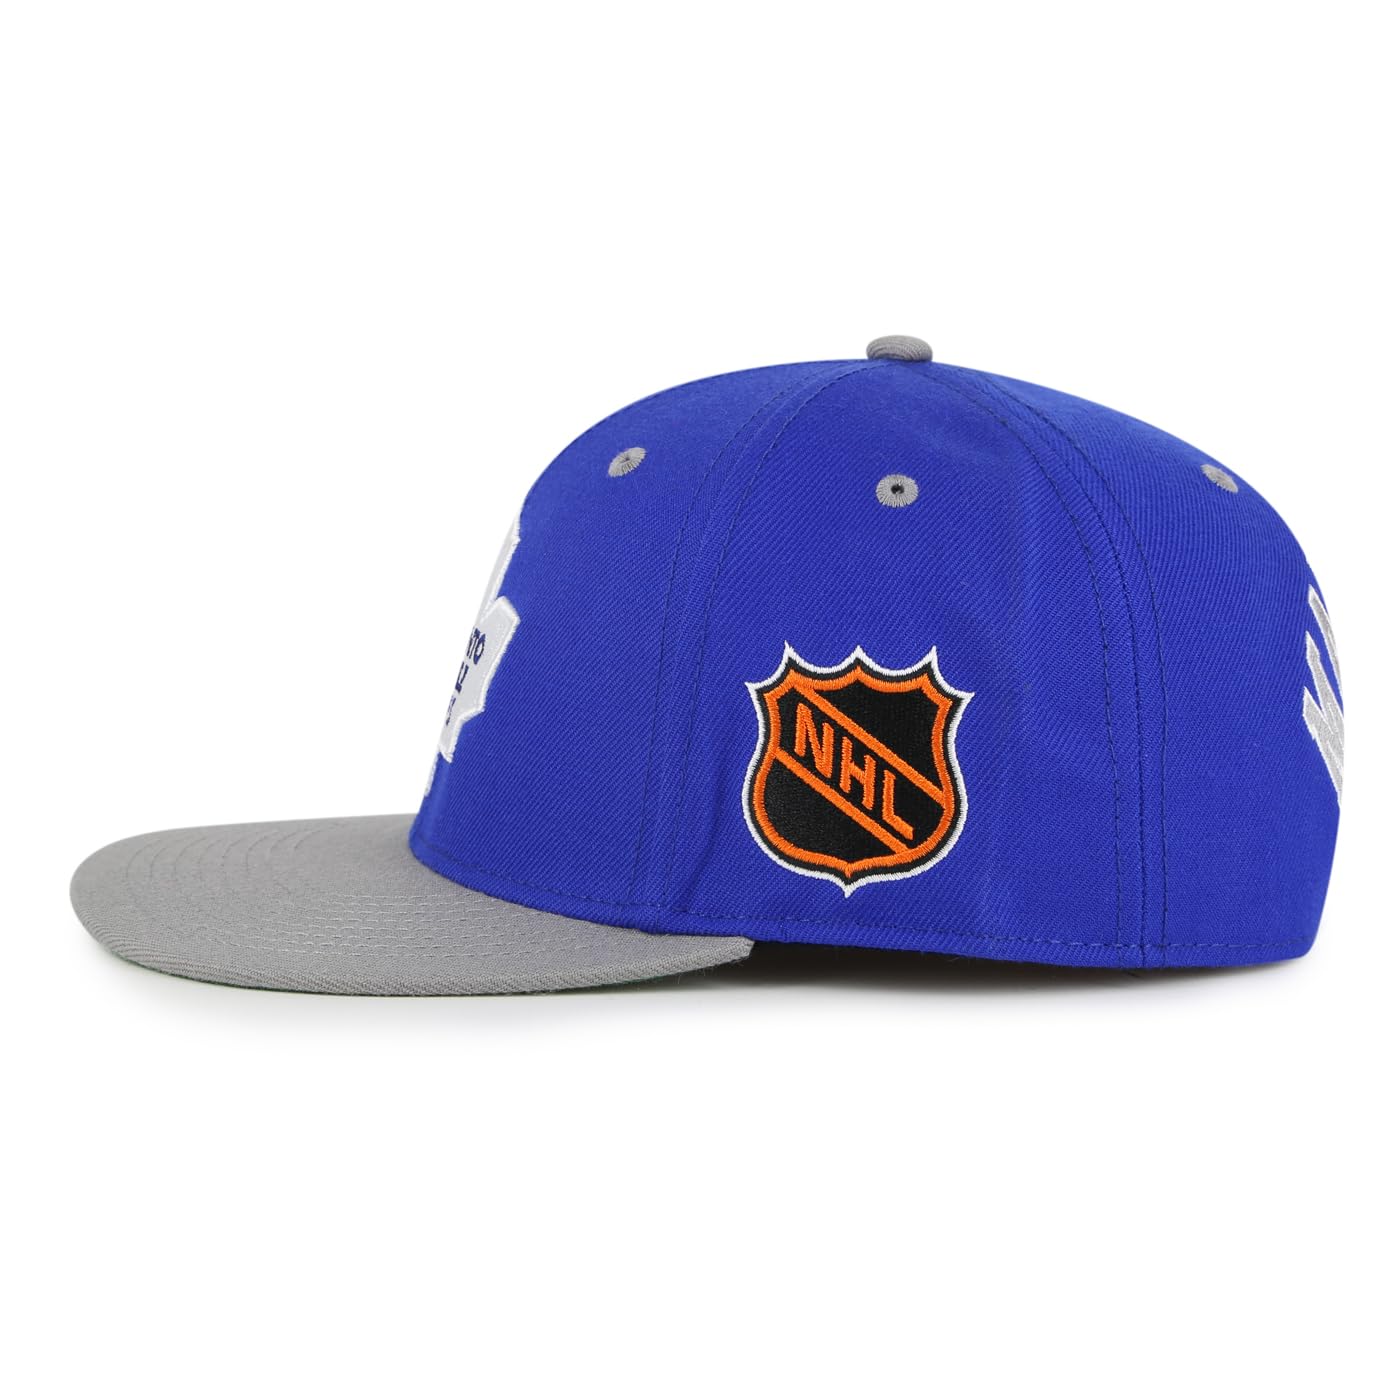 AMERICAN NEEDLE Blockhead 2 NHL Team Flat Brim Hat, Toronto Maple Leafs, Royal/Gray (43732A-TML)